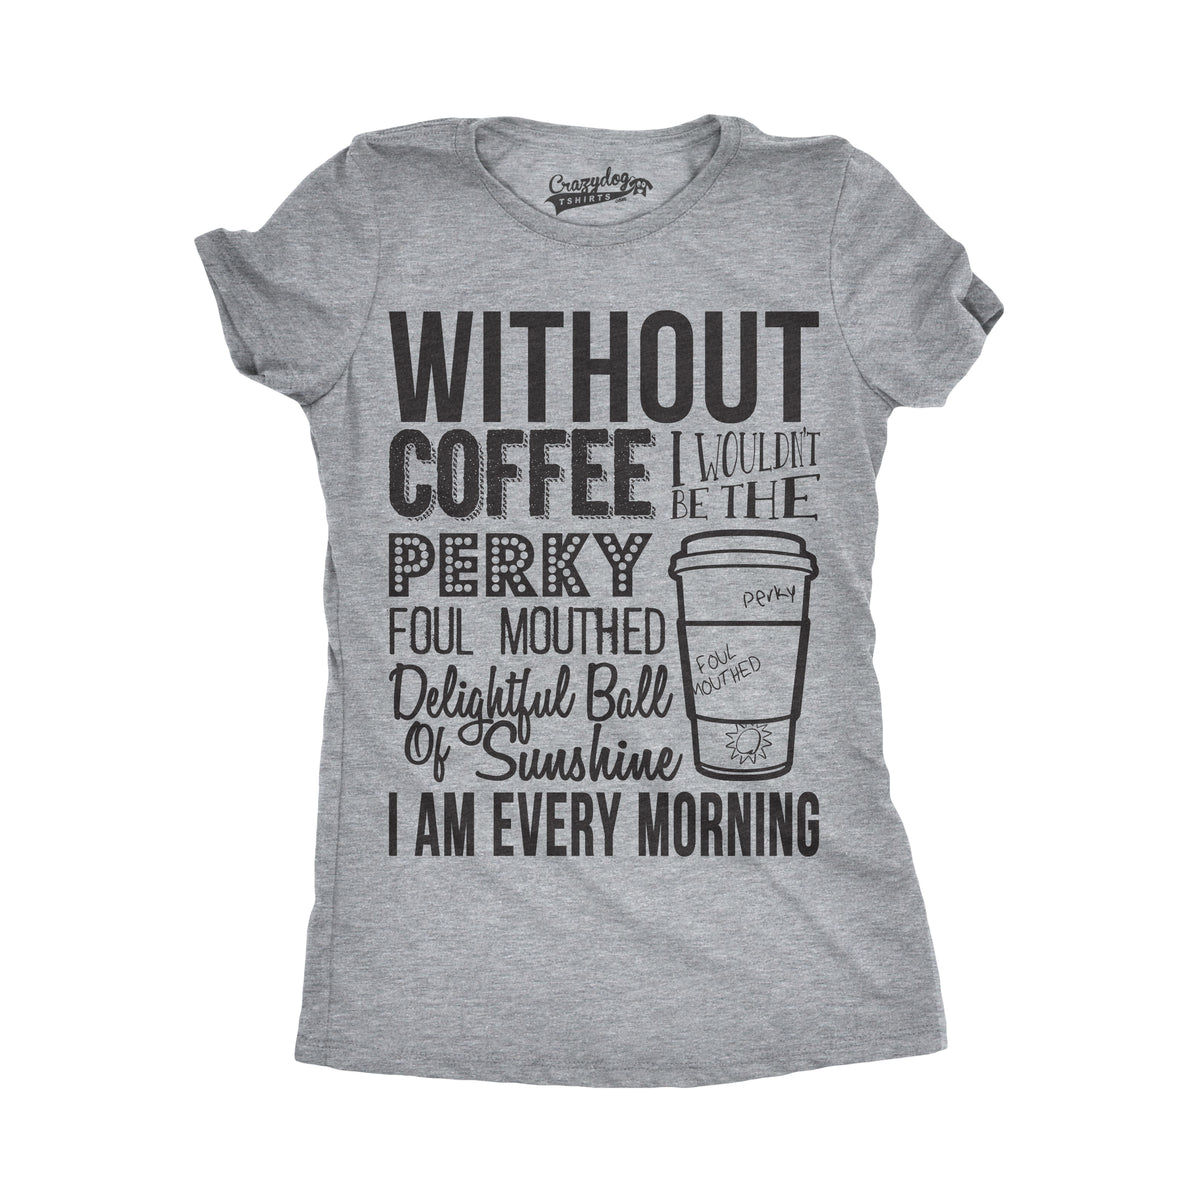 Funny Light Heather Grey Womens T Shirt Nerdy Coffee Food Retro Tee